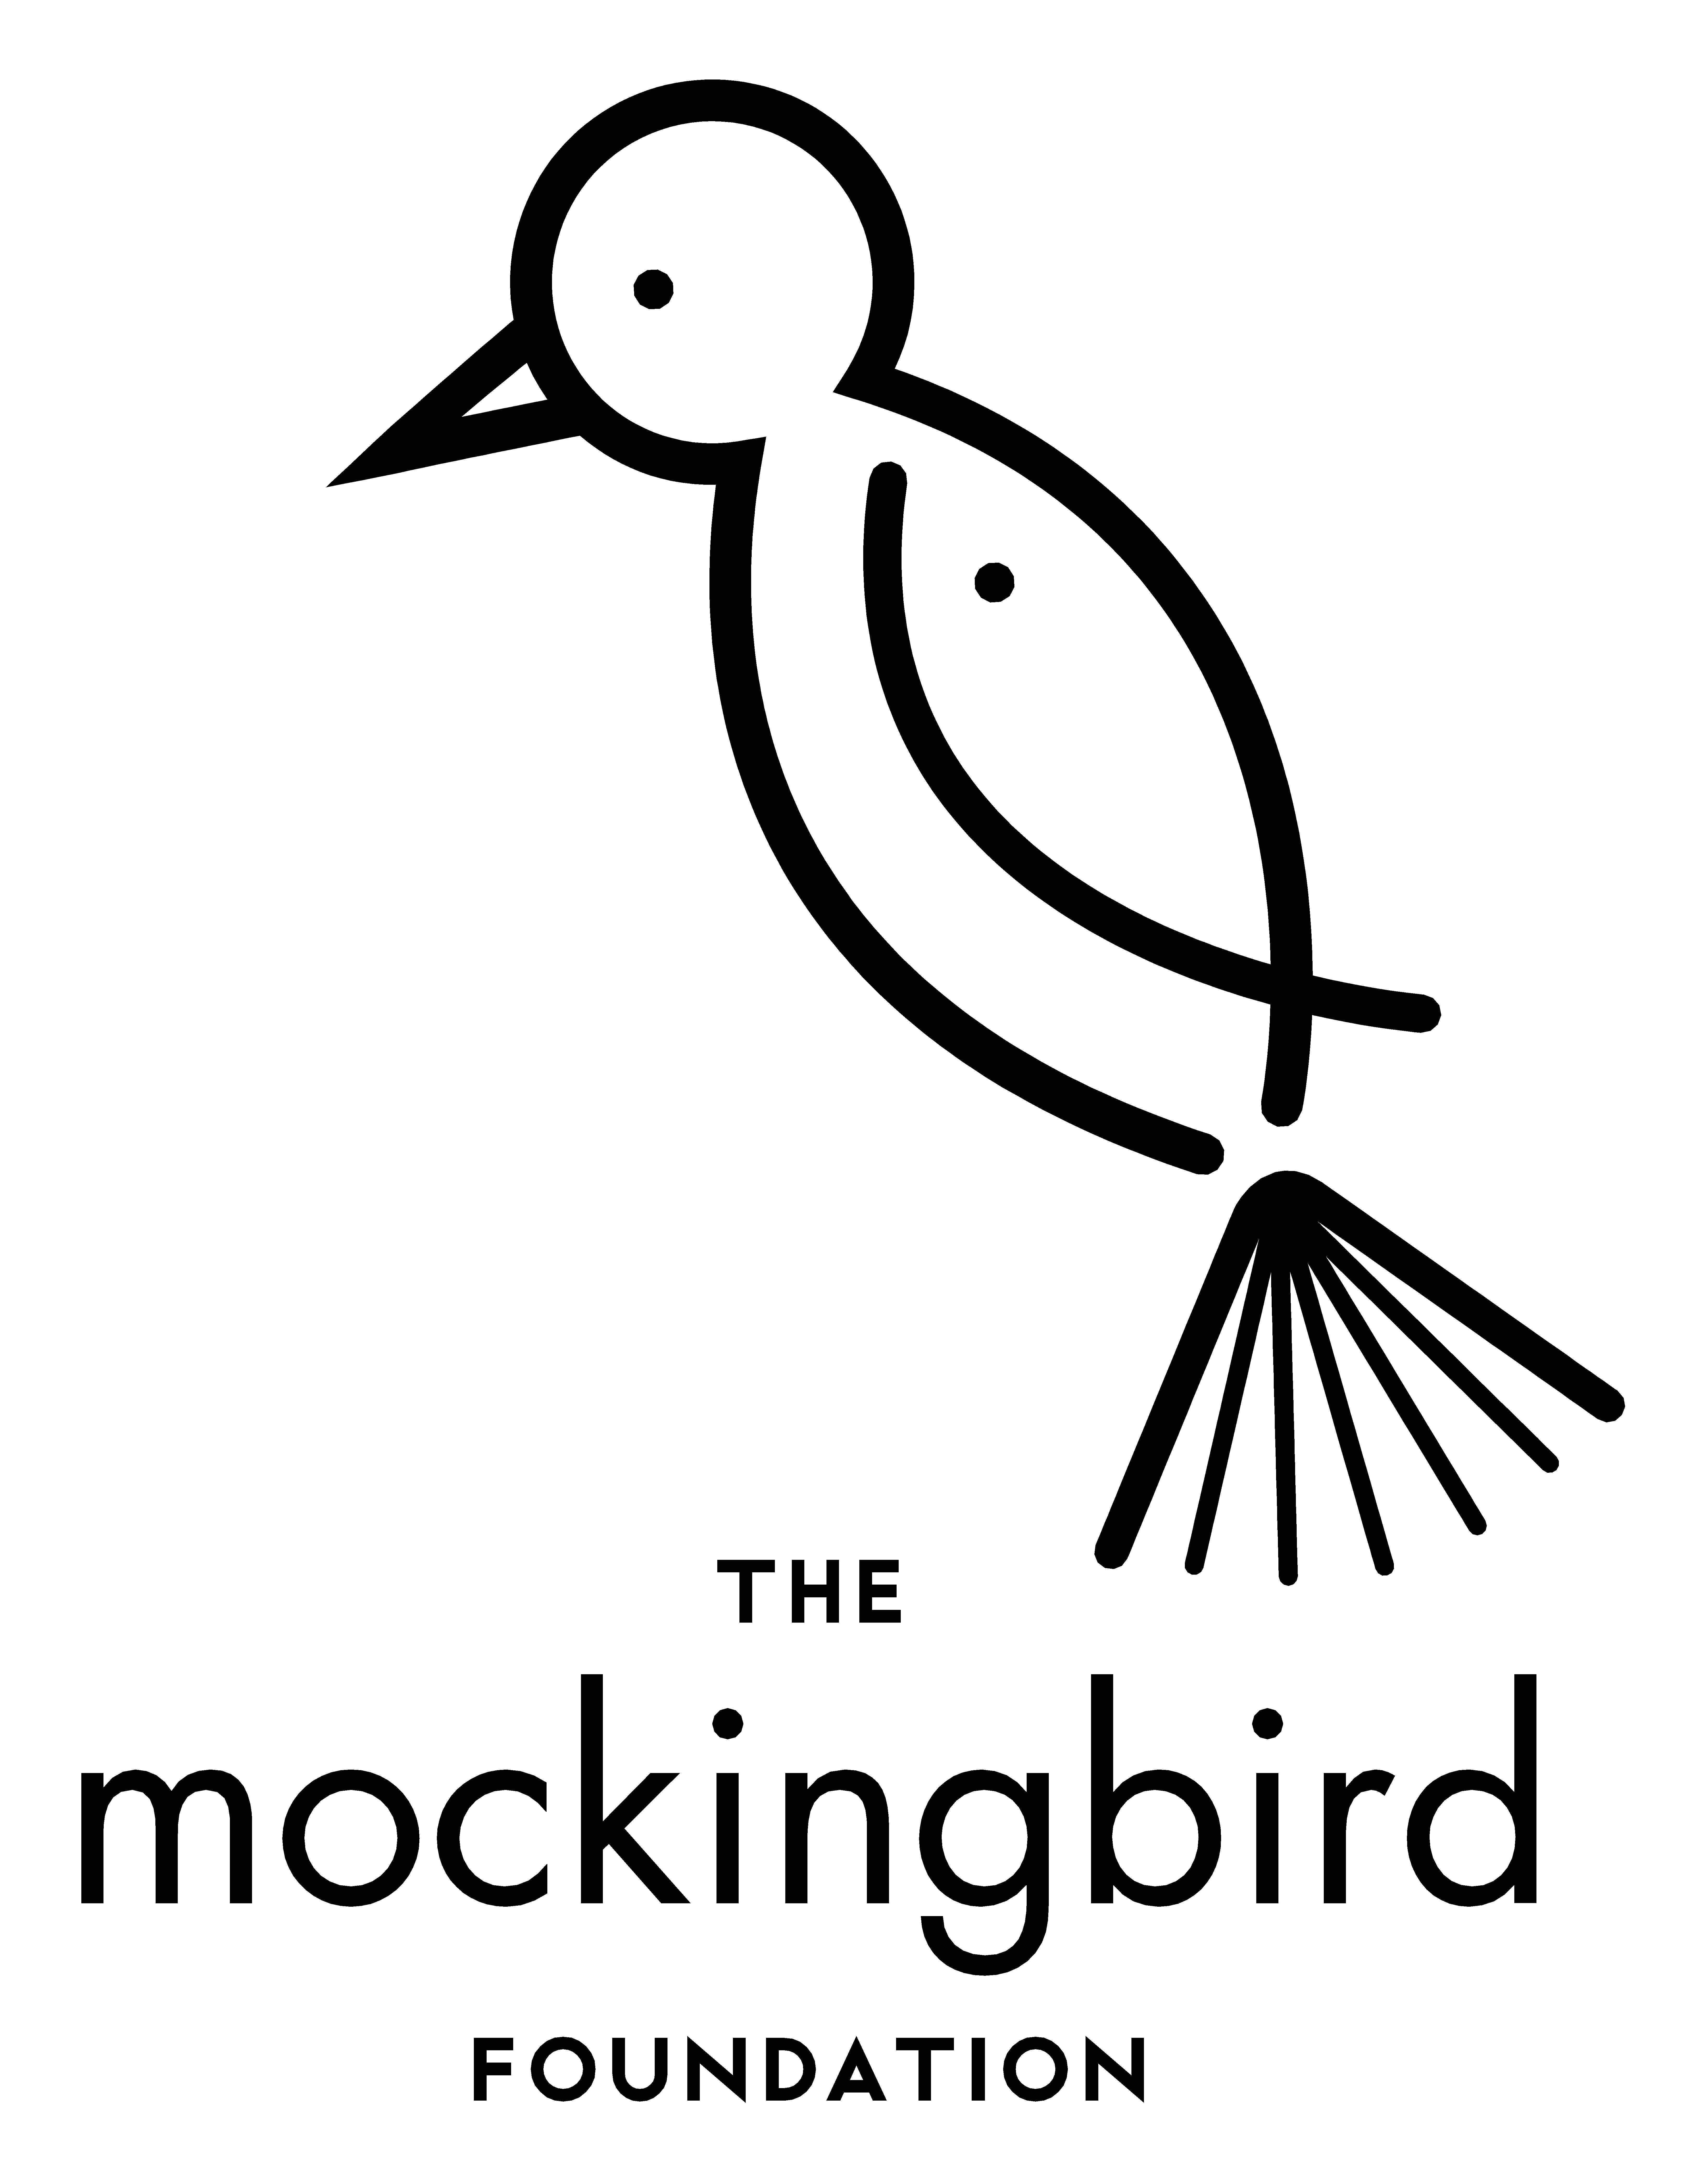 The mockingbird Foundation